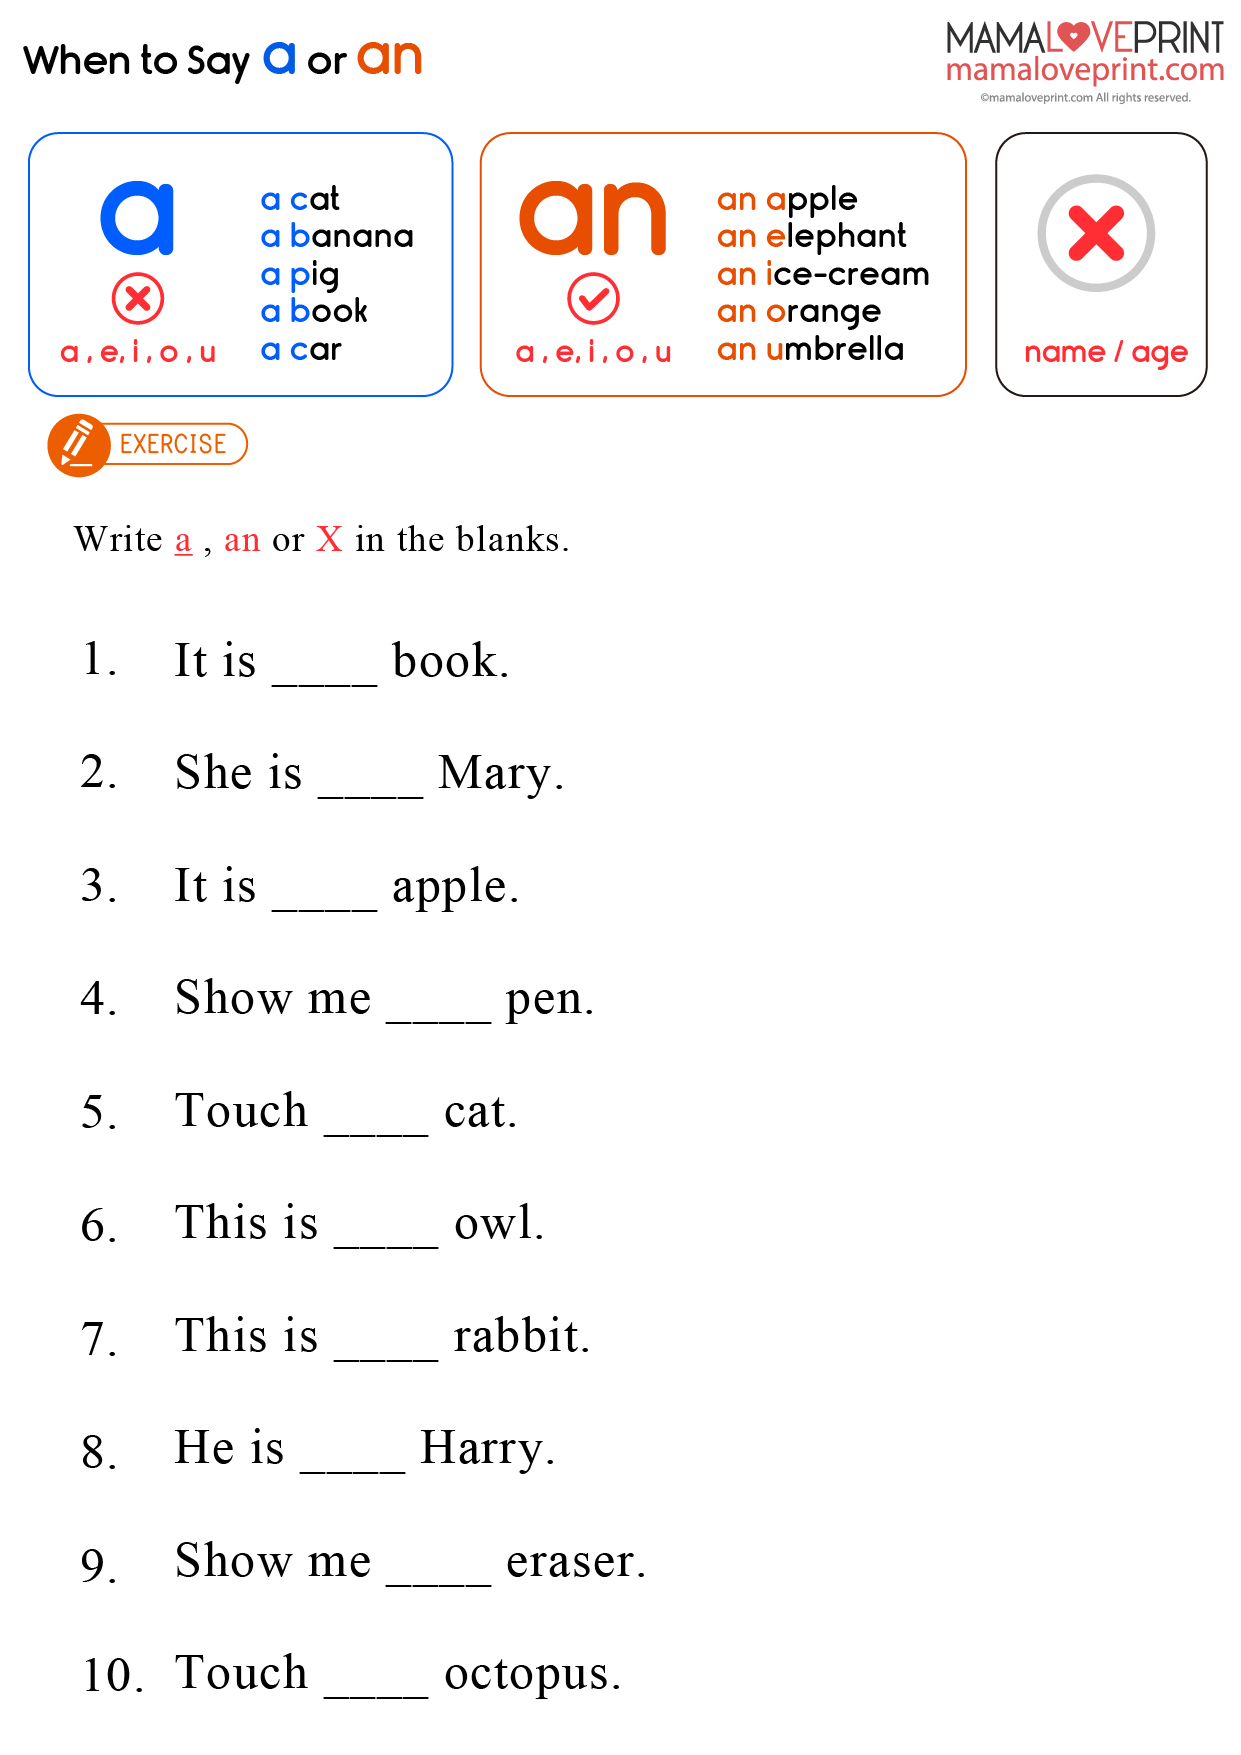 mamaloveprint grade 1 english worksheets basic grammar articles level 2 a an x pdf free download